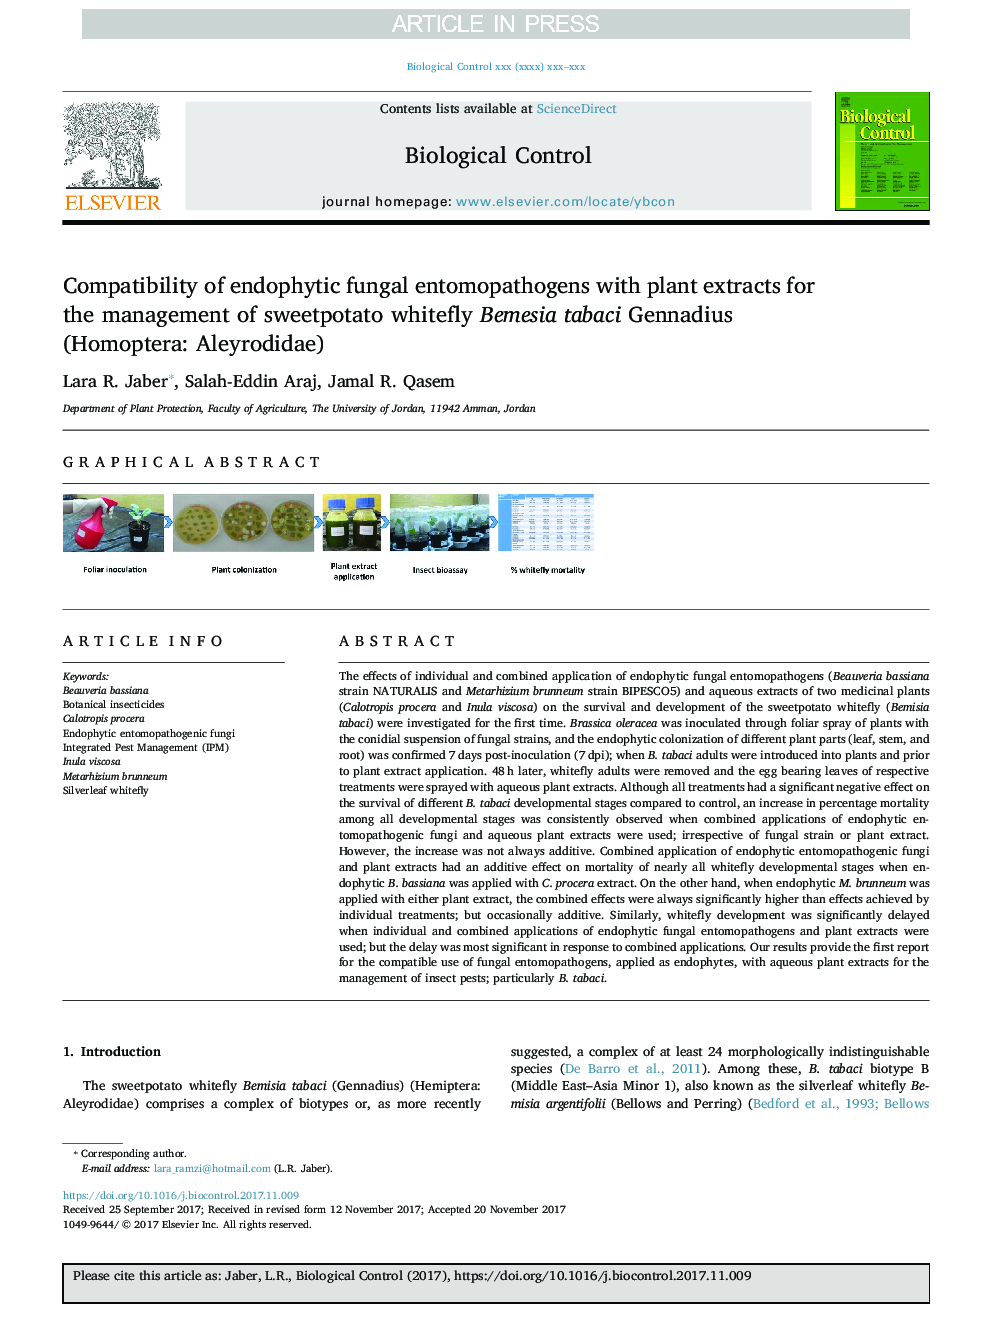 Compatibility of endophytic fungal entomopathogens with plant extracts for the management of sweetpotato whitefly Bemesia tabaci Gennadius (Homoptera: Aleyrodidae)